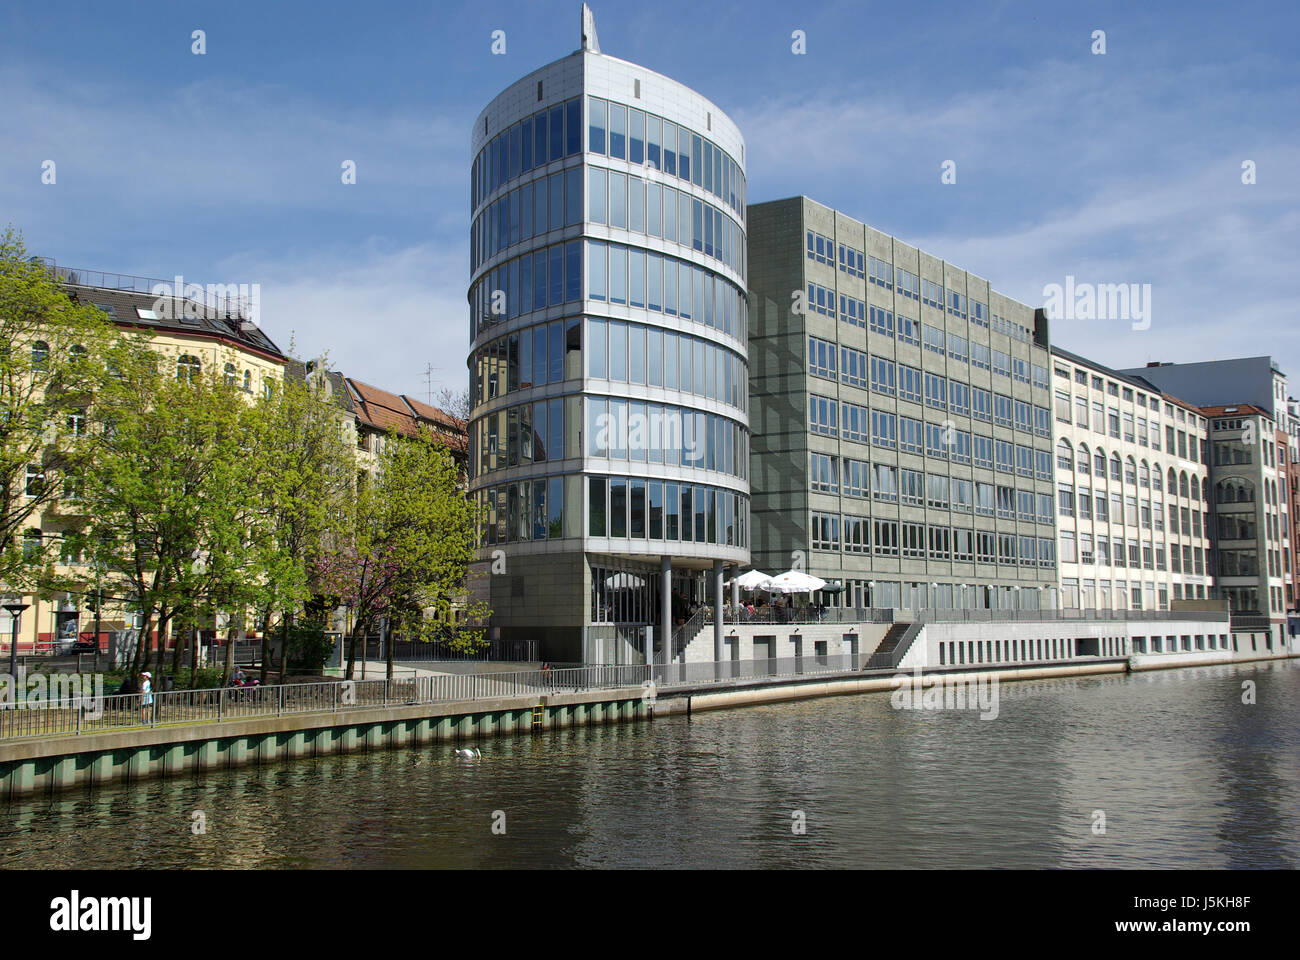 architecture on the river spree in berlin Stock Photo